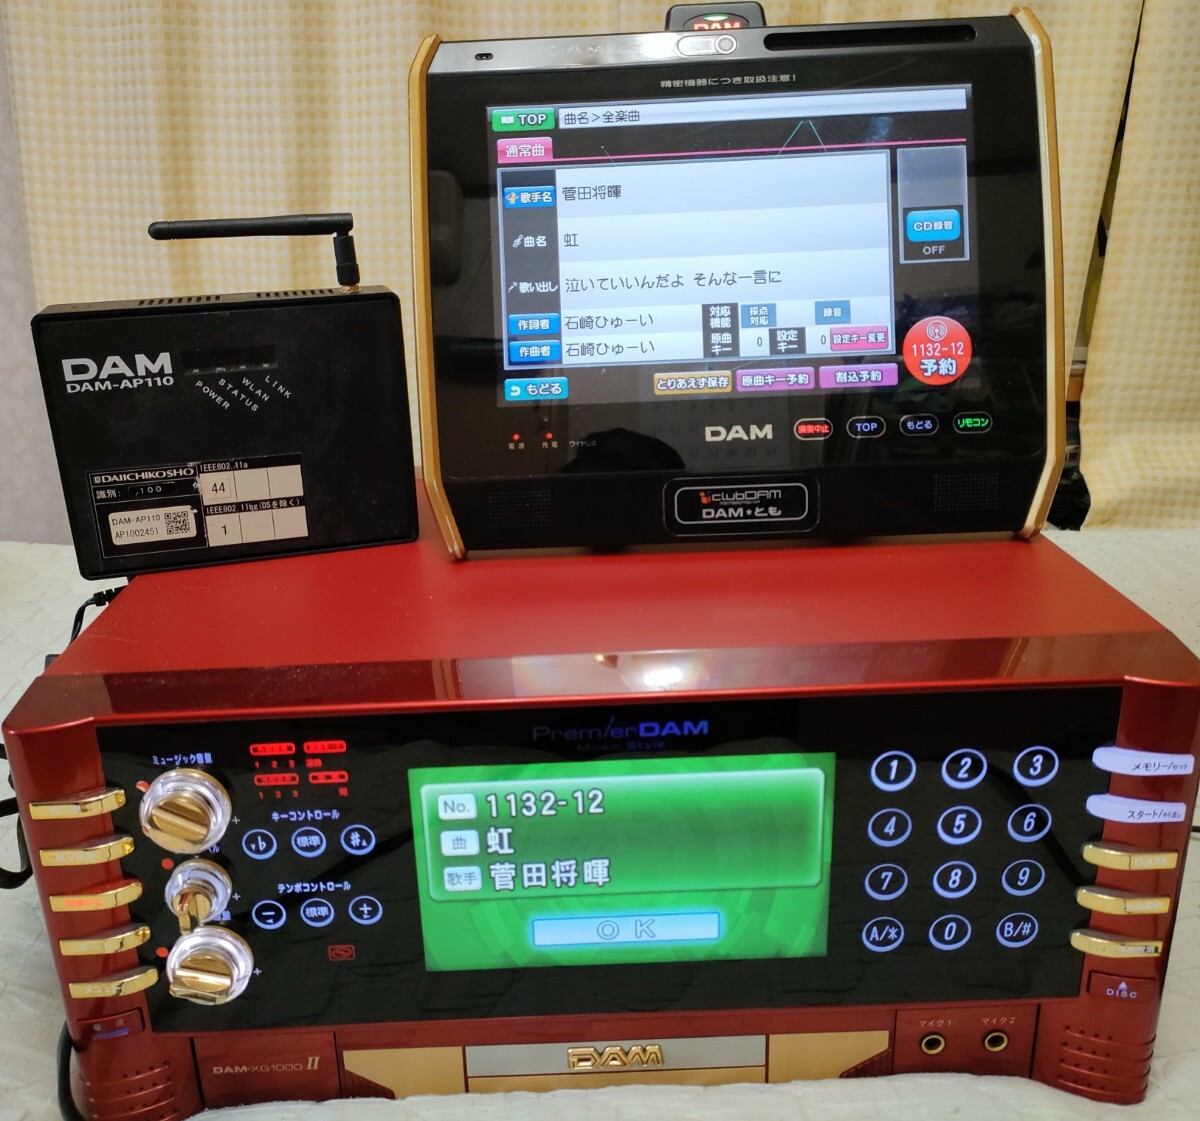 DAM-XG1000II the first . quotient karaoke machine .temok(DAM..). modem set 